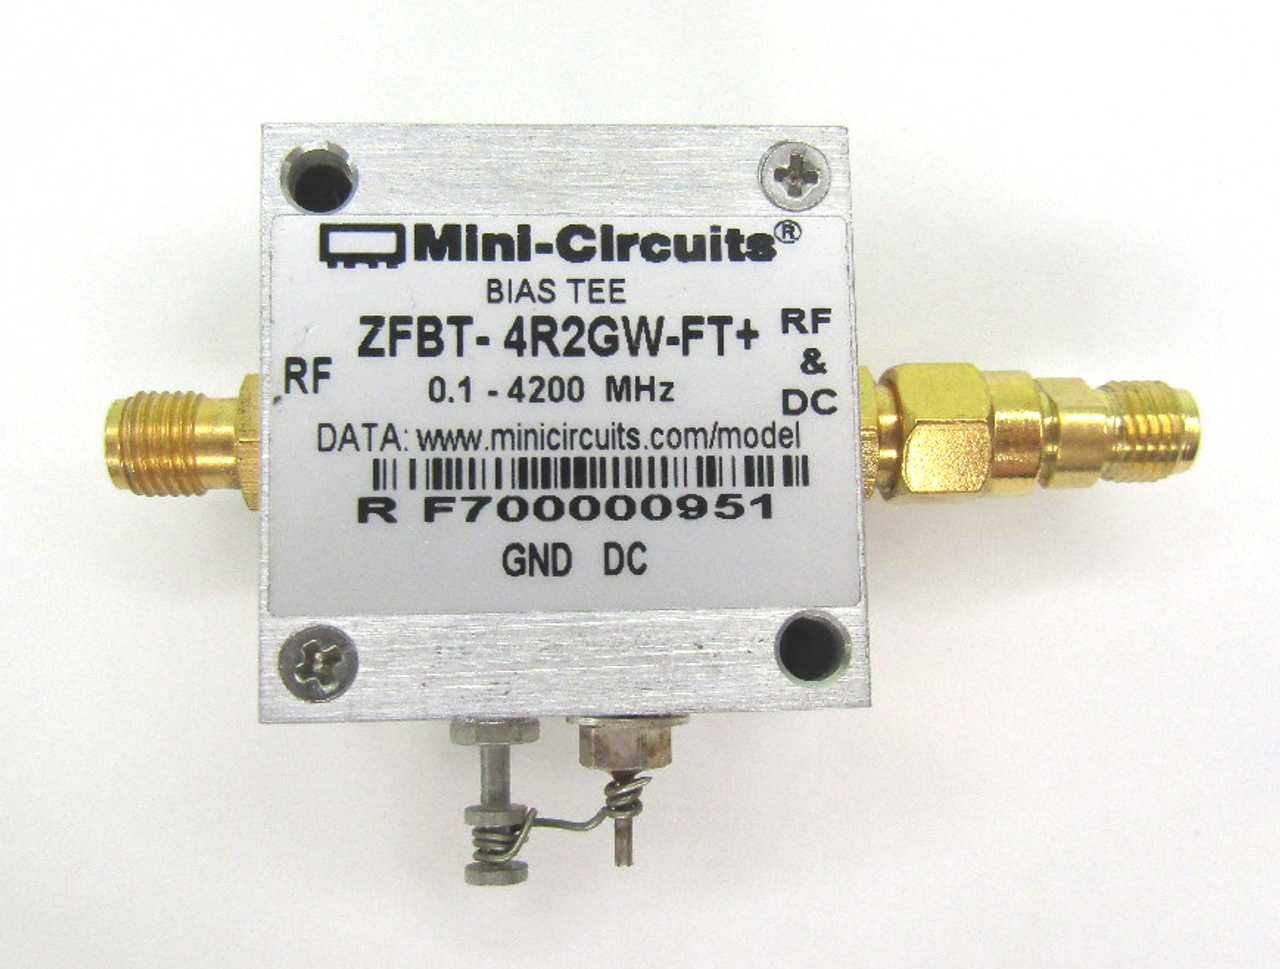 Mini-Circuits ZFBT-4R2GW-FT+ Bias Tee, 0.1-4200MHz